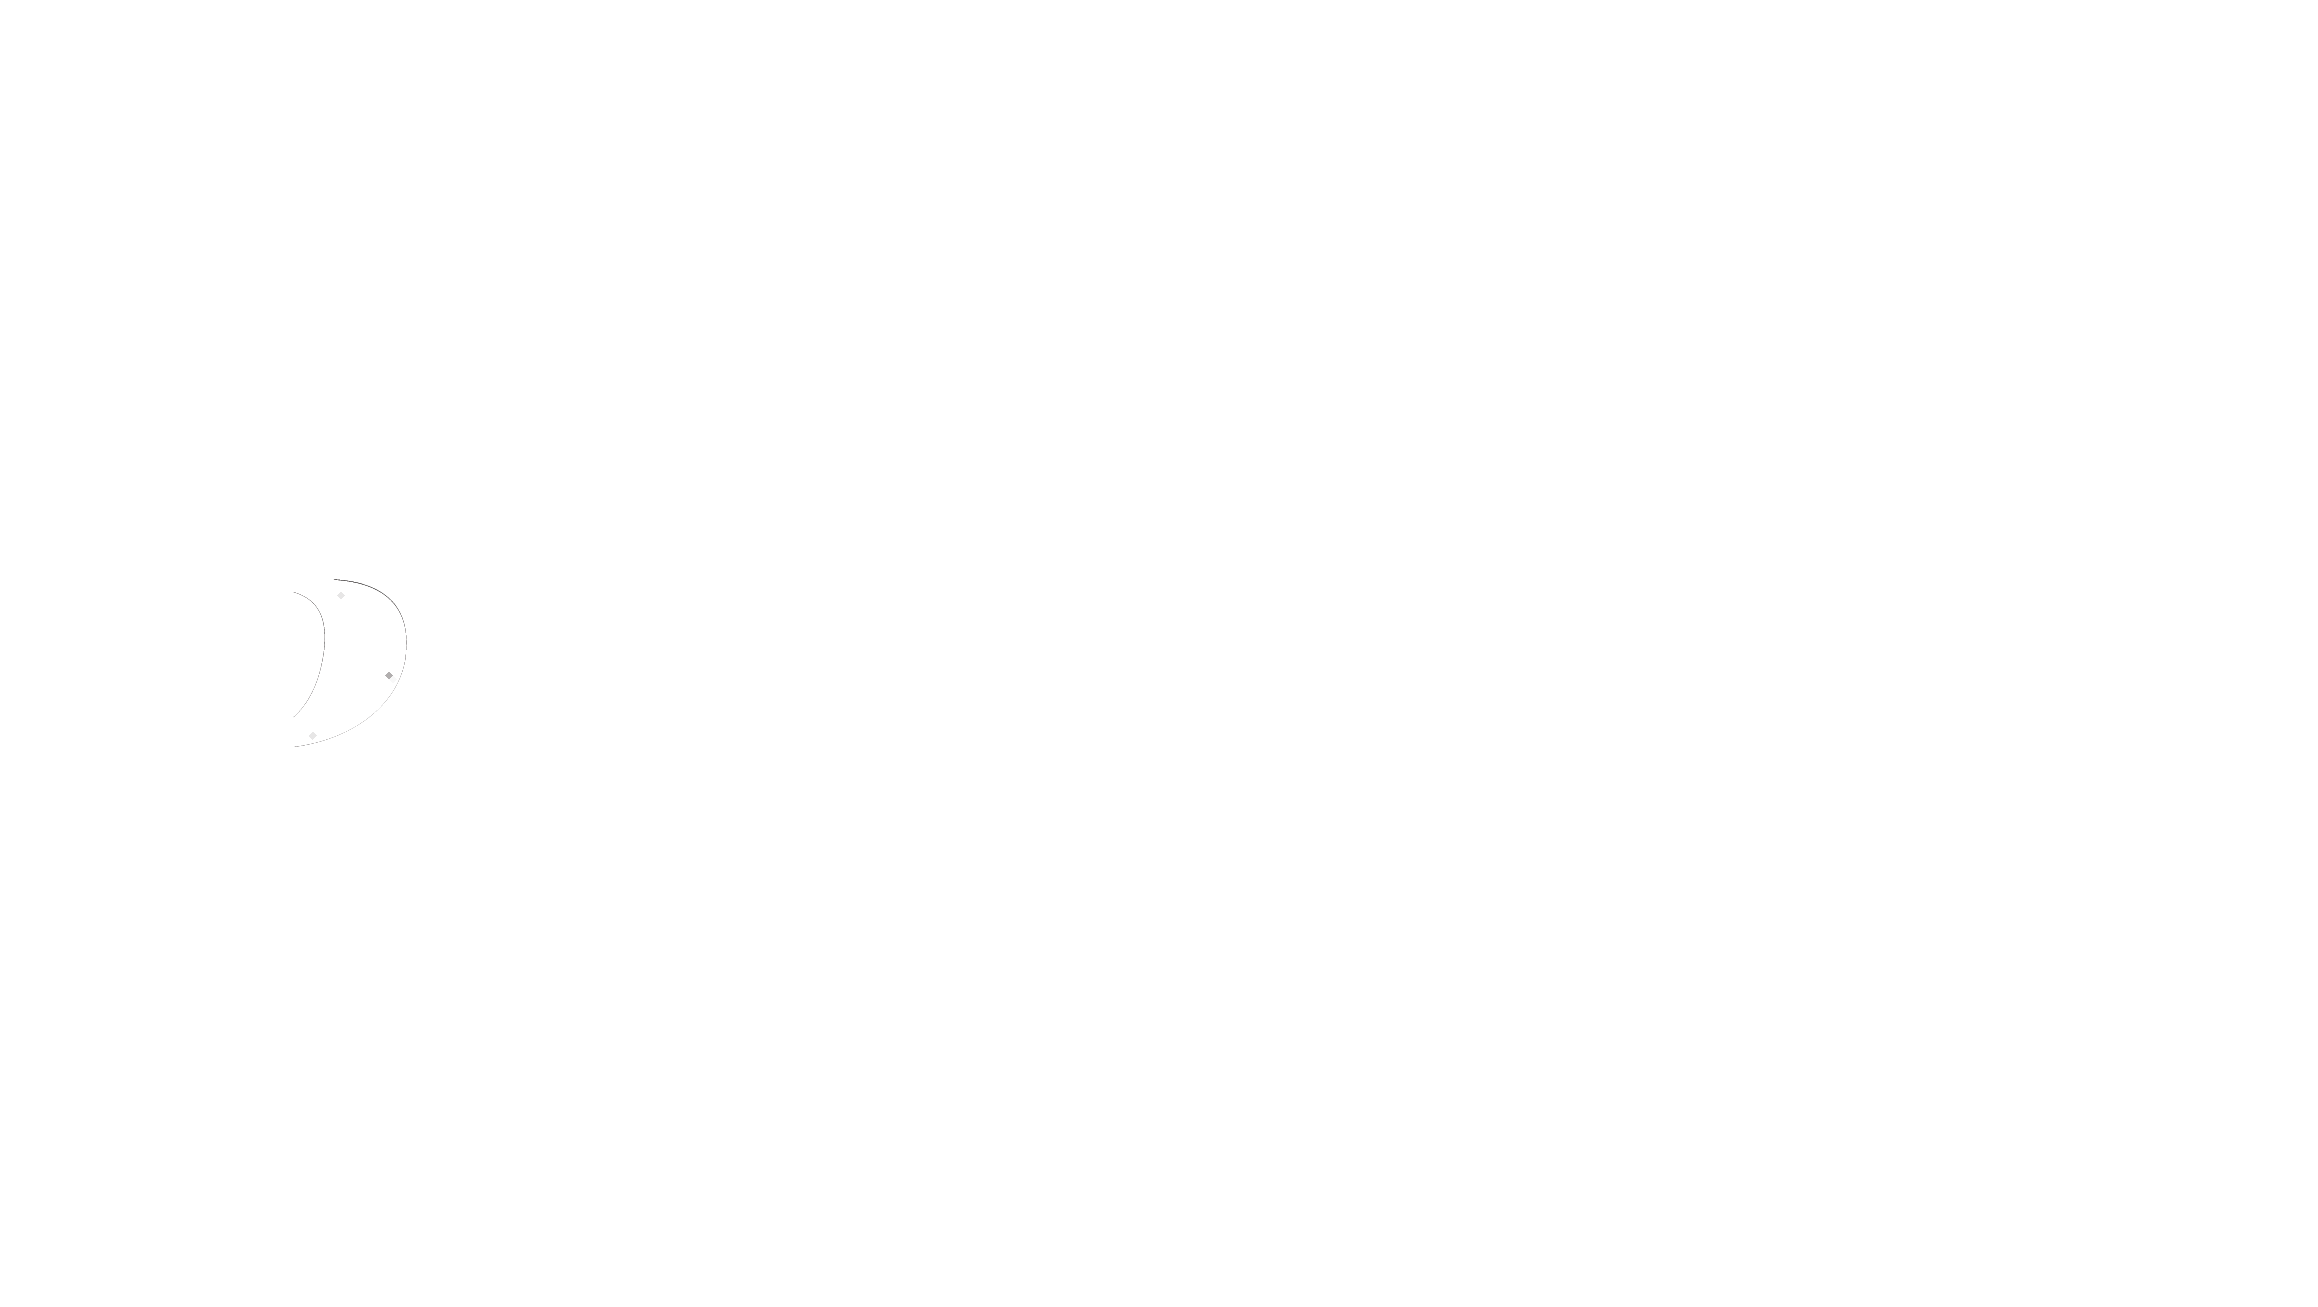 (c) Beatitudehouse.org